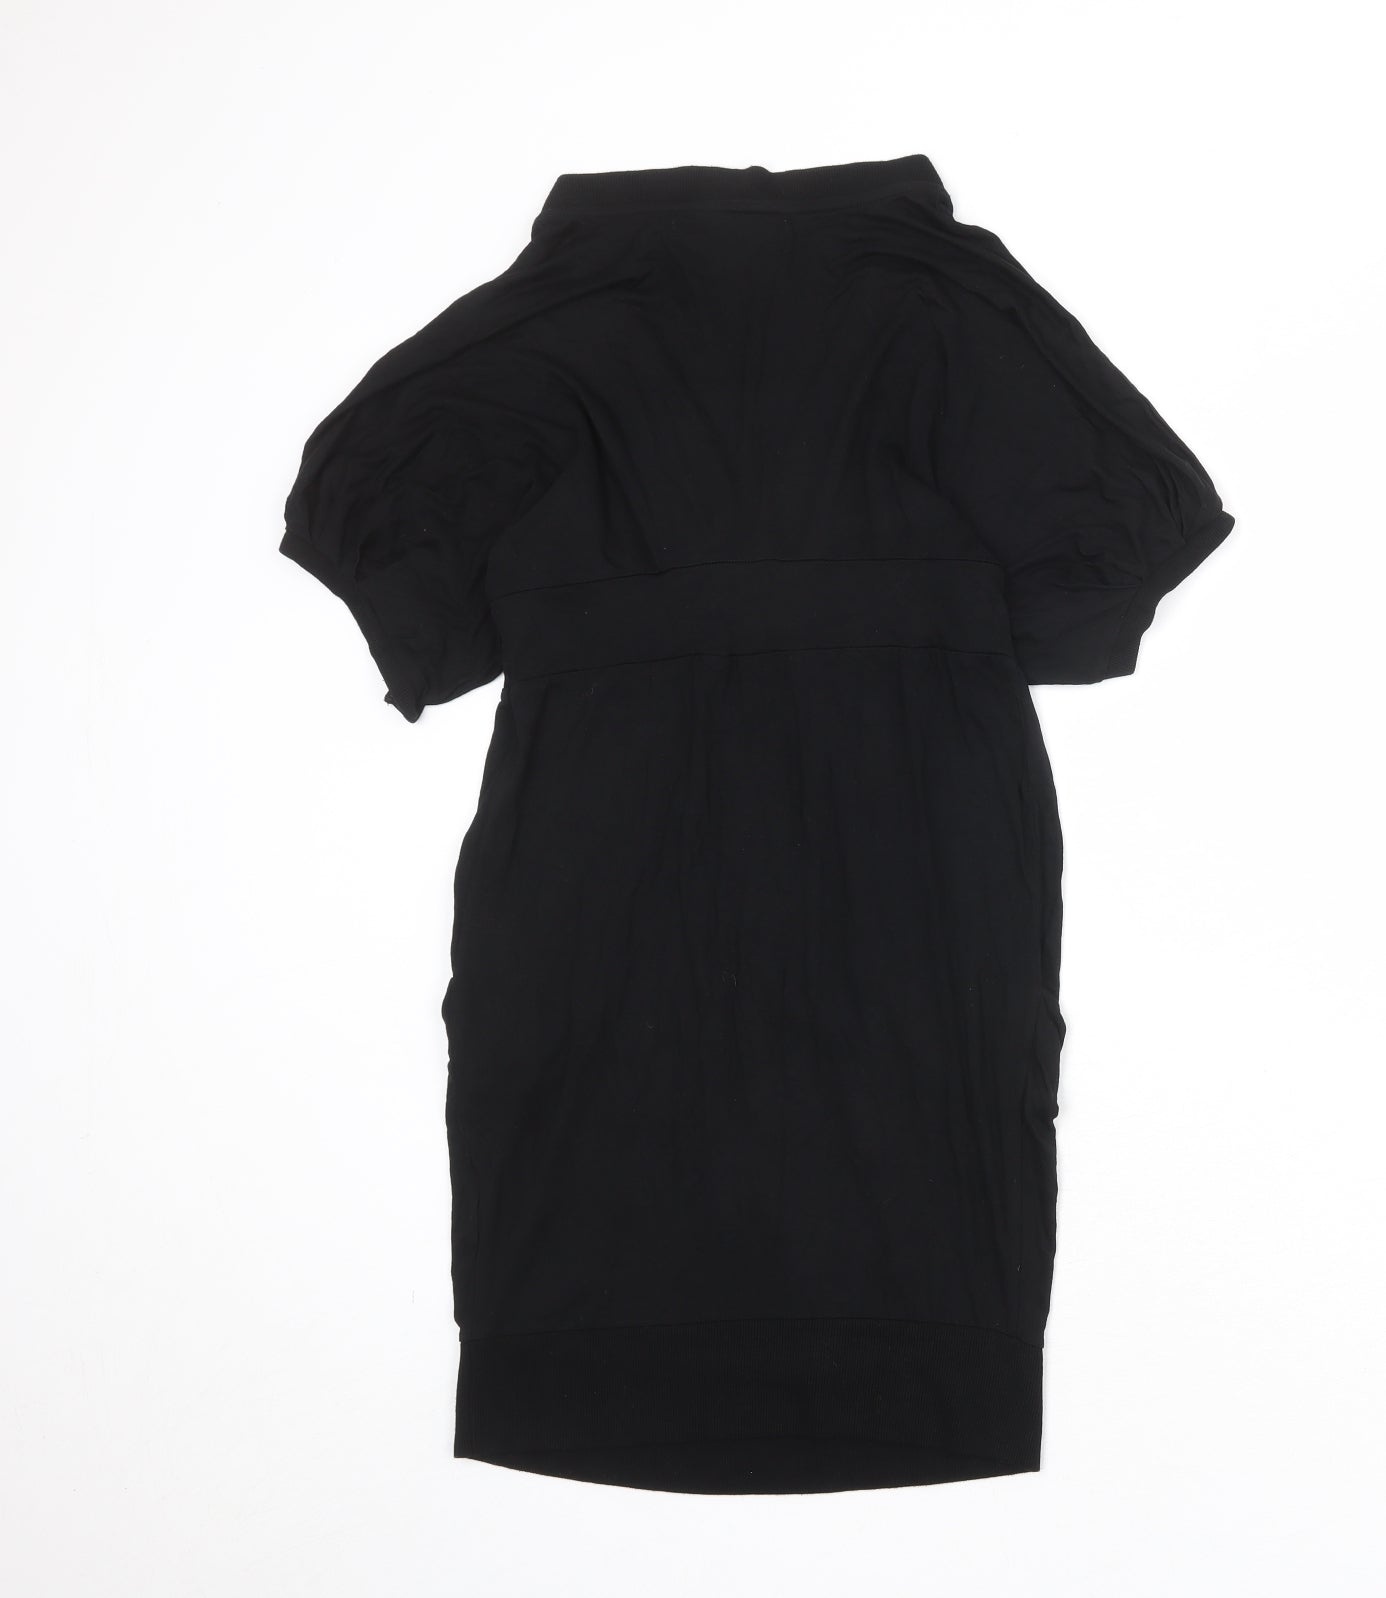 Zara Womens Black Polyester Shift Size M V-Neck Pullover